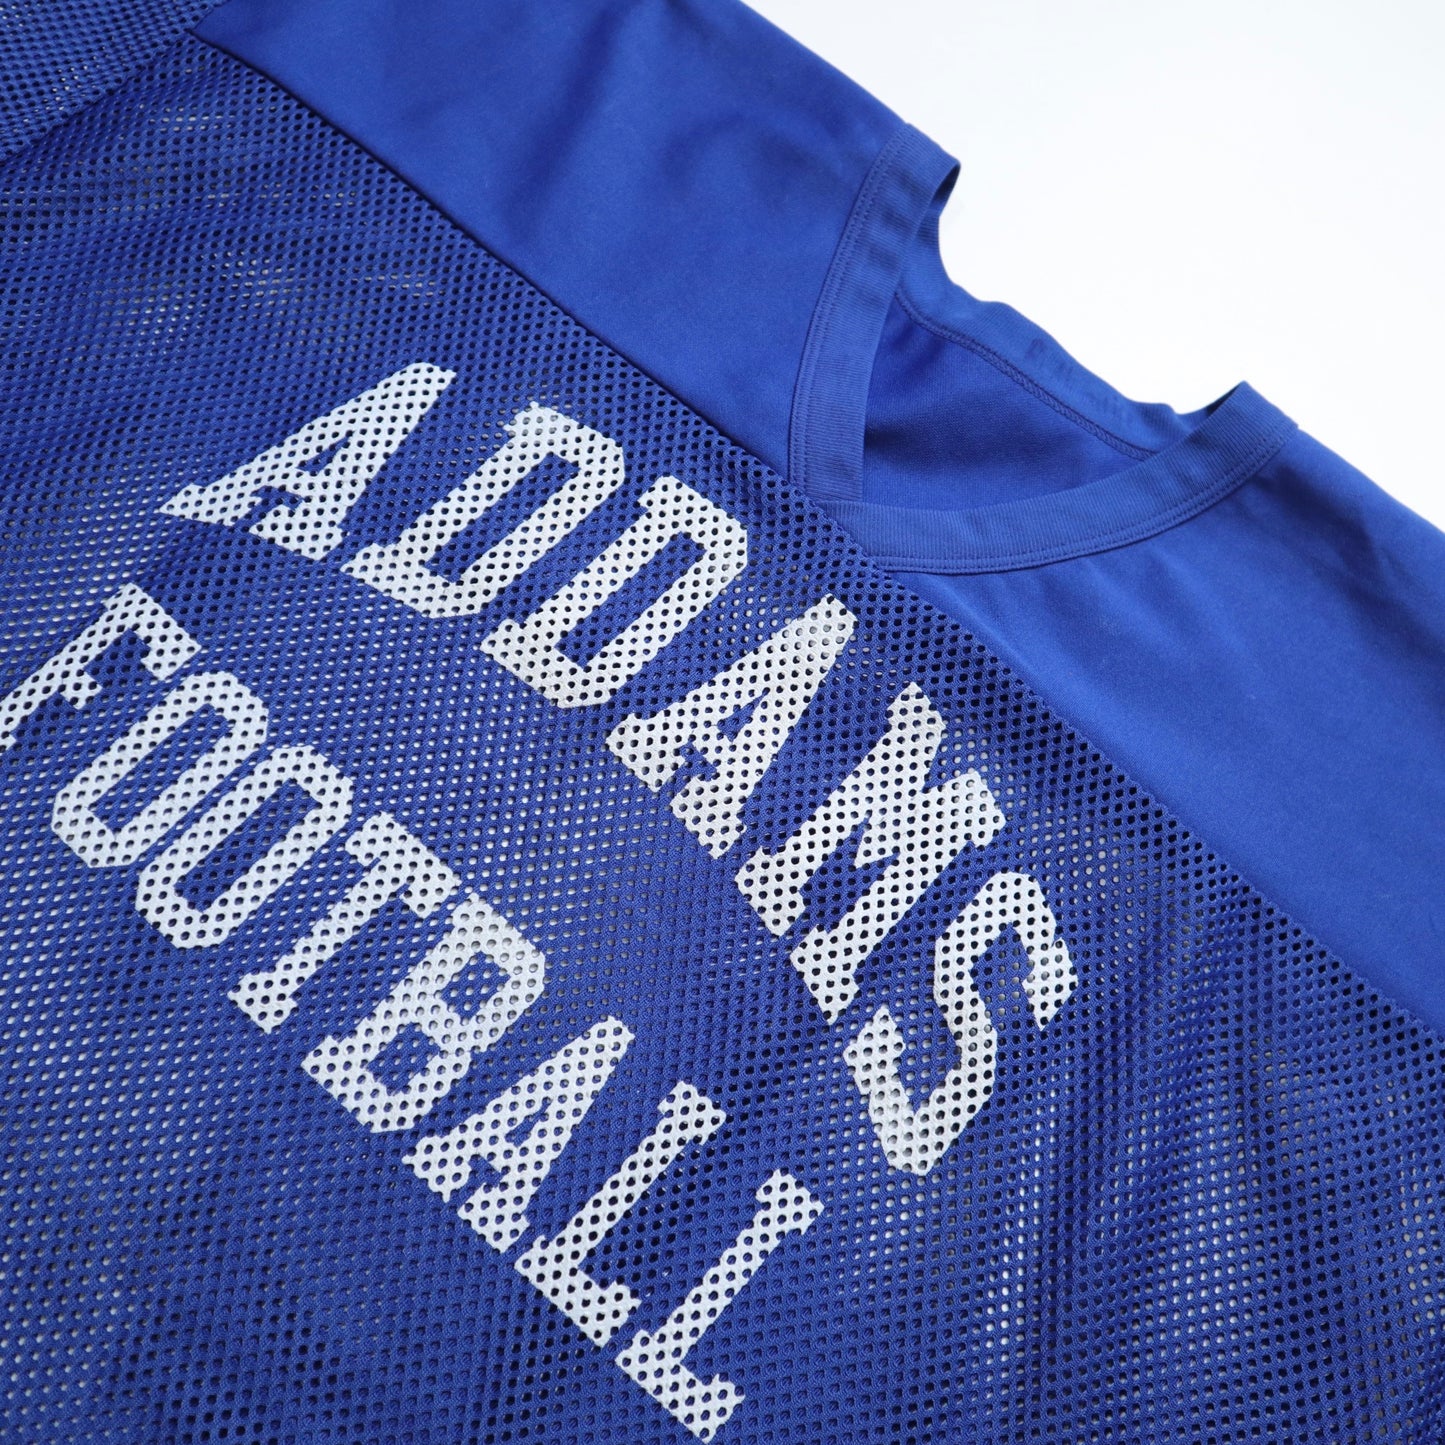 90s Russell 墨西哥製 Addams Football 寶藍色美式足球網洞衣